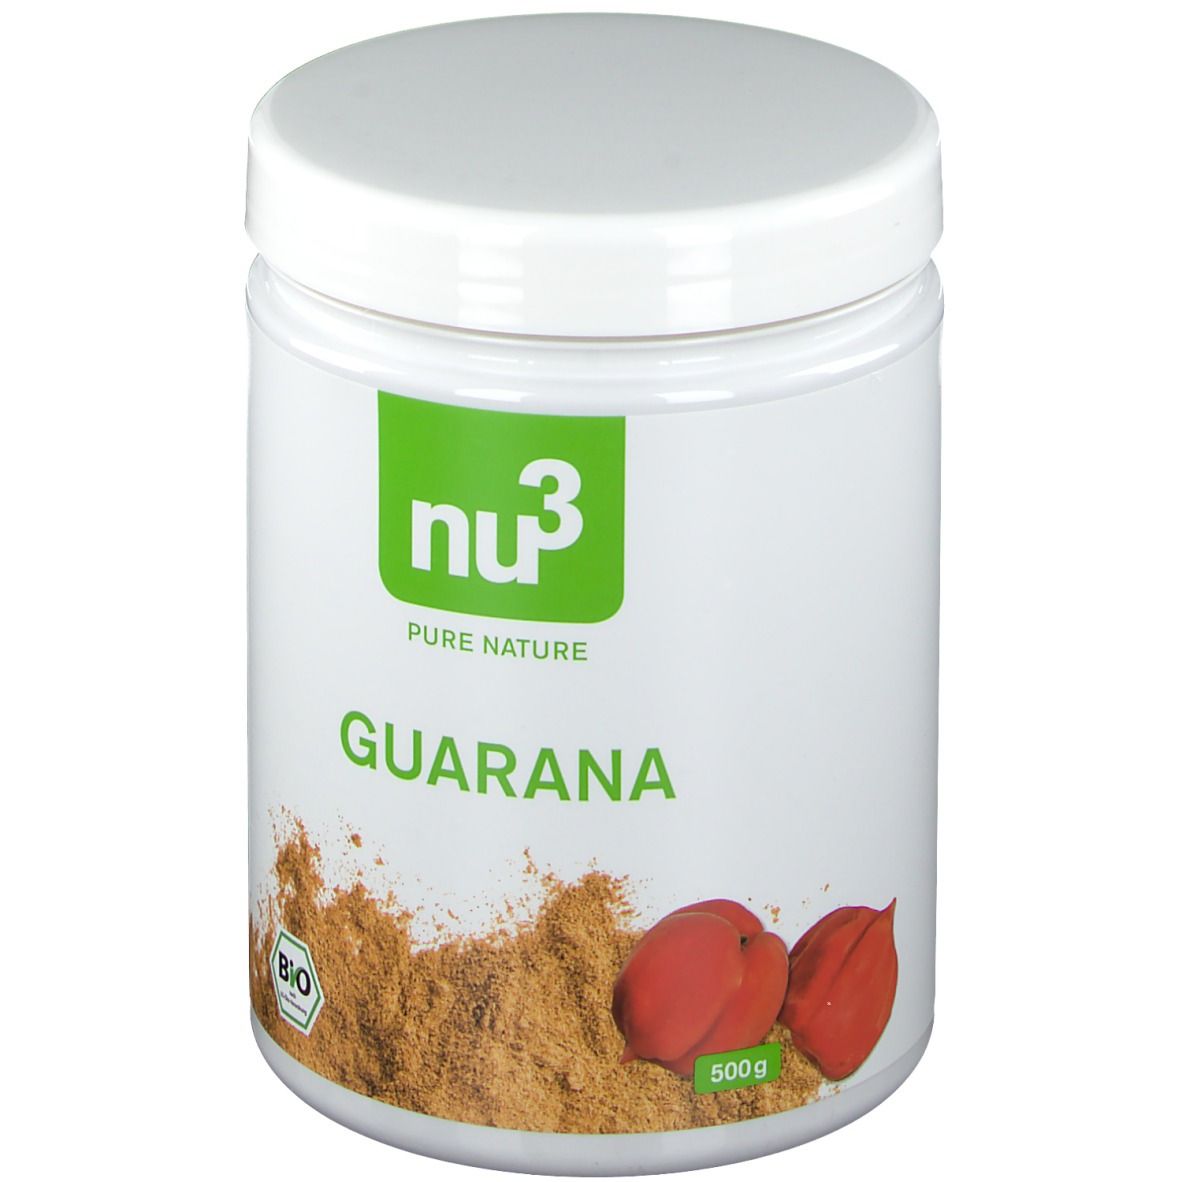 nu3 Guarana